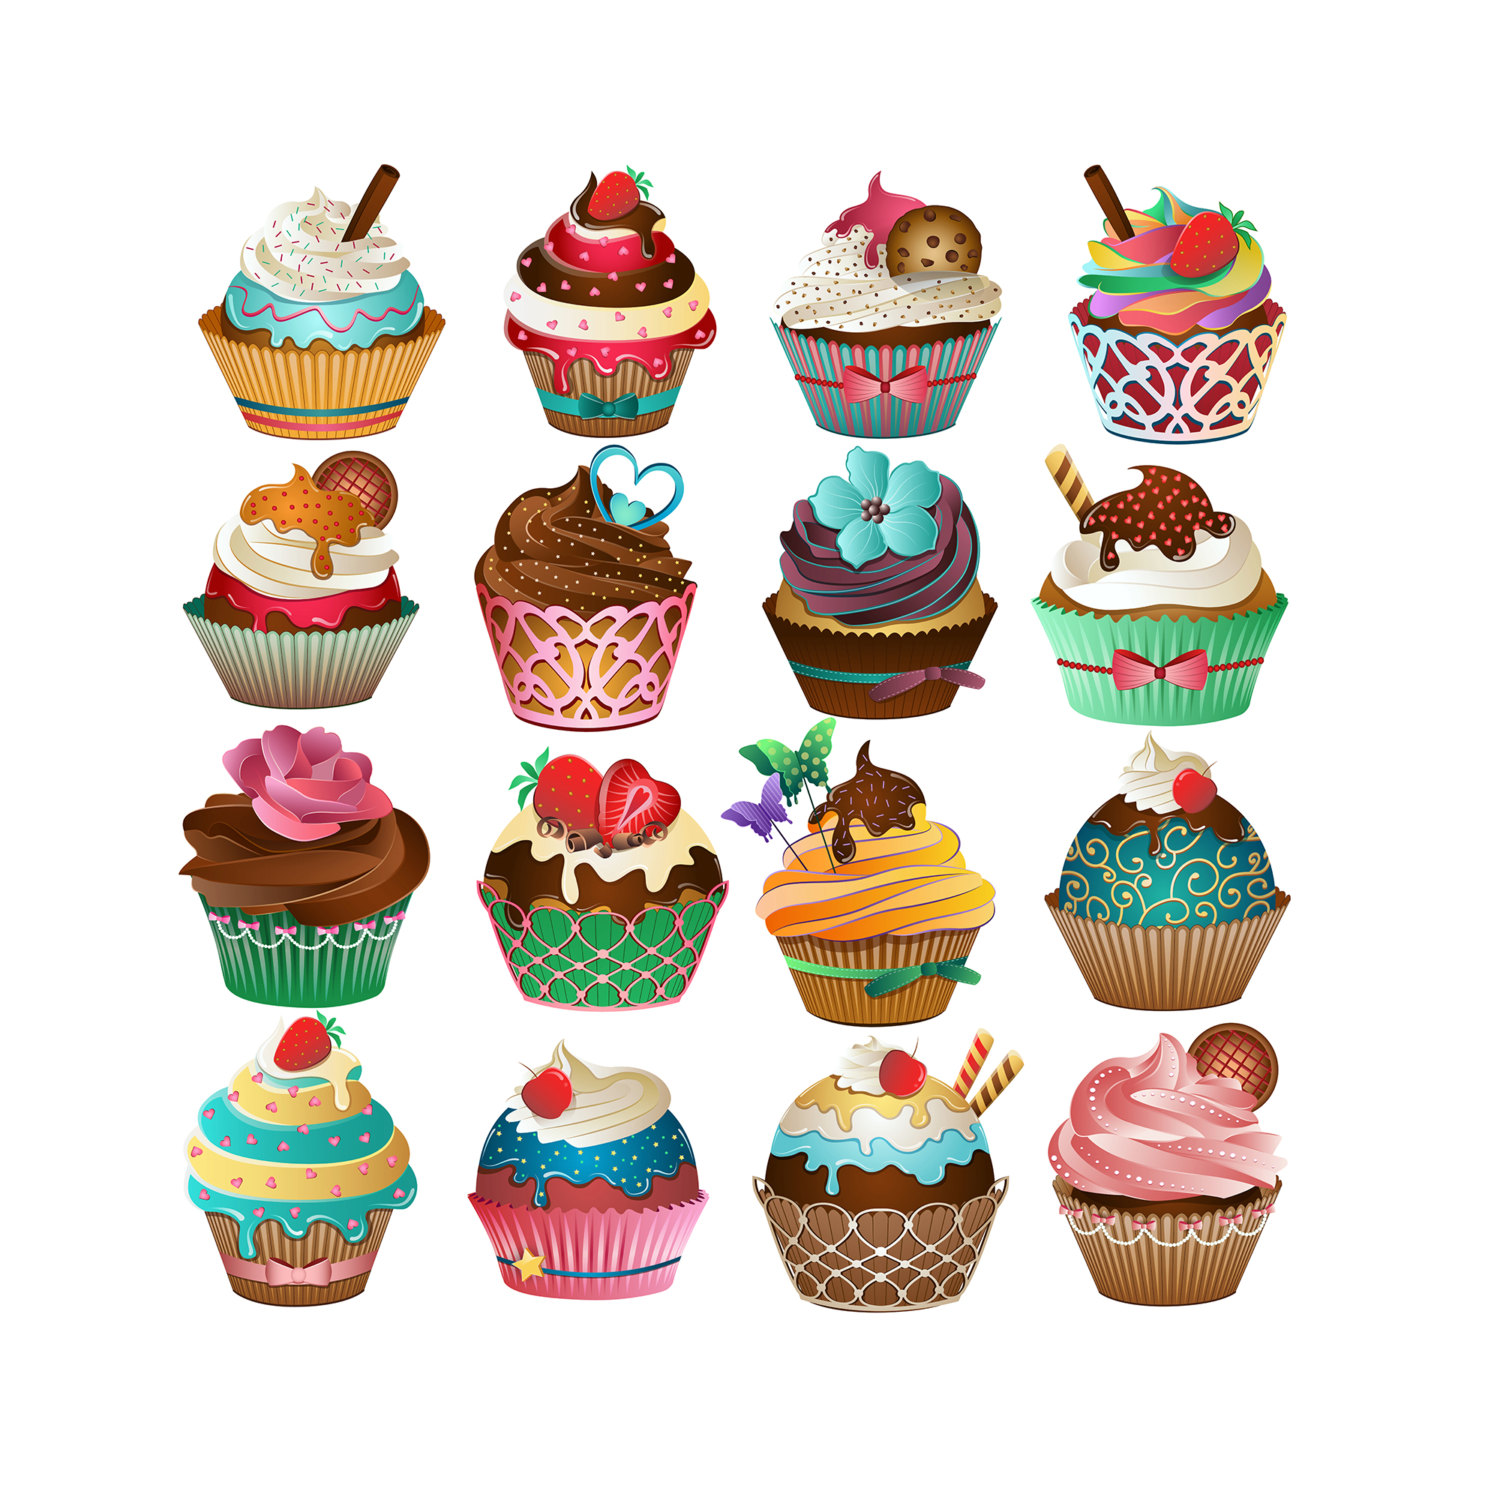 Cute cupcake set of. Desserts clipart spring